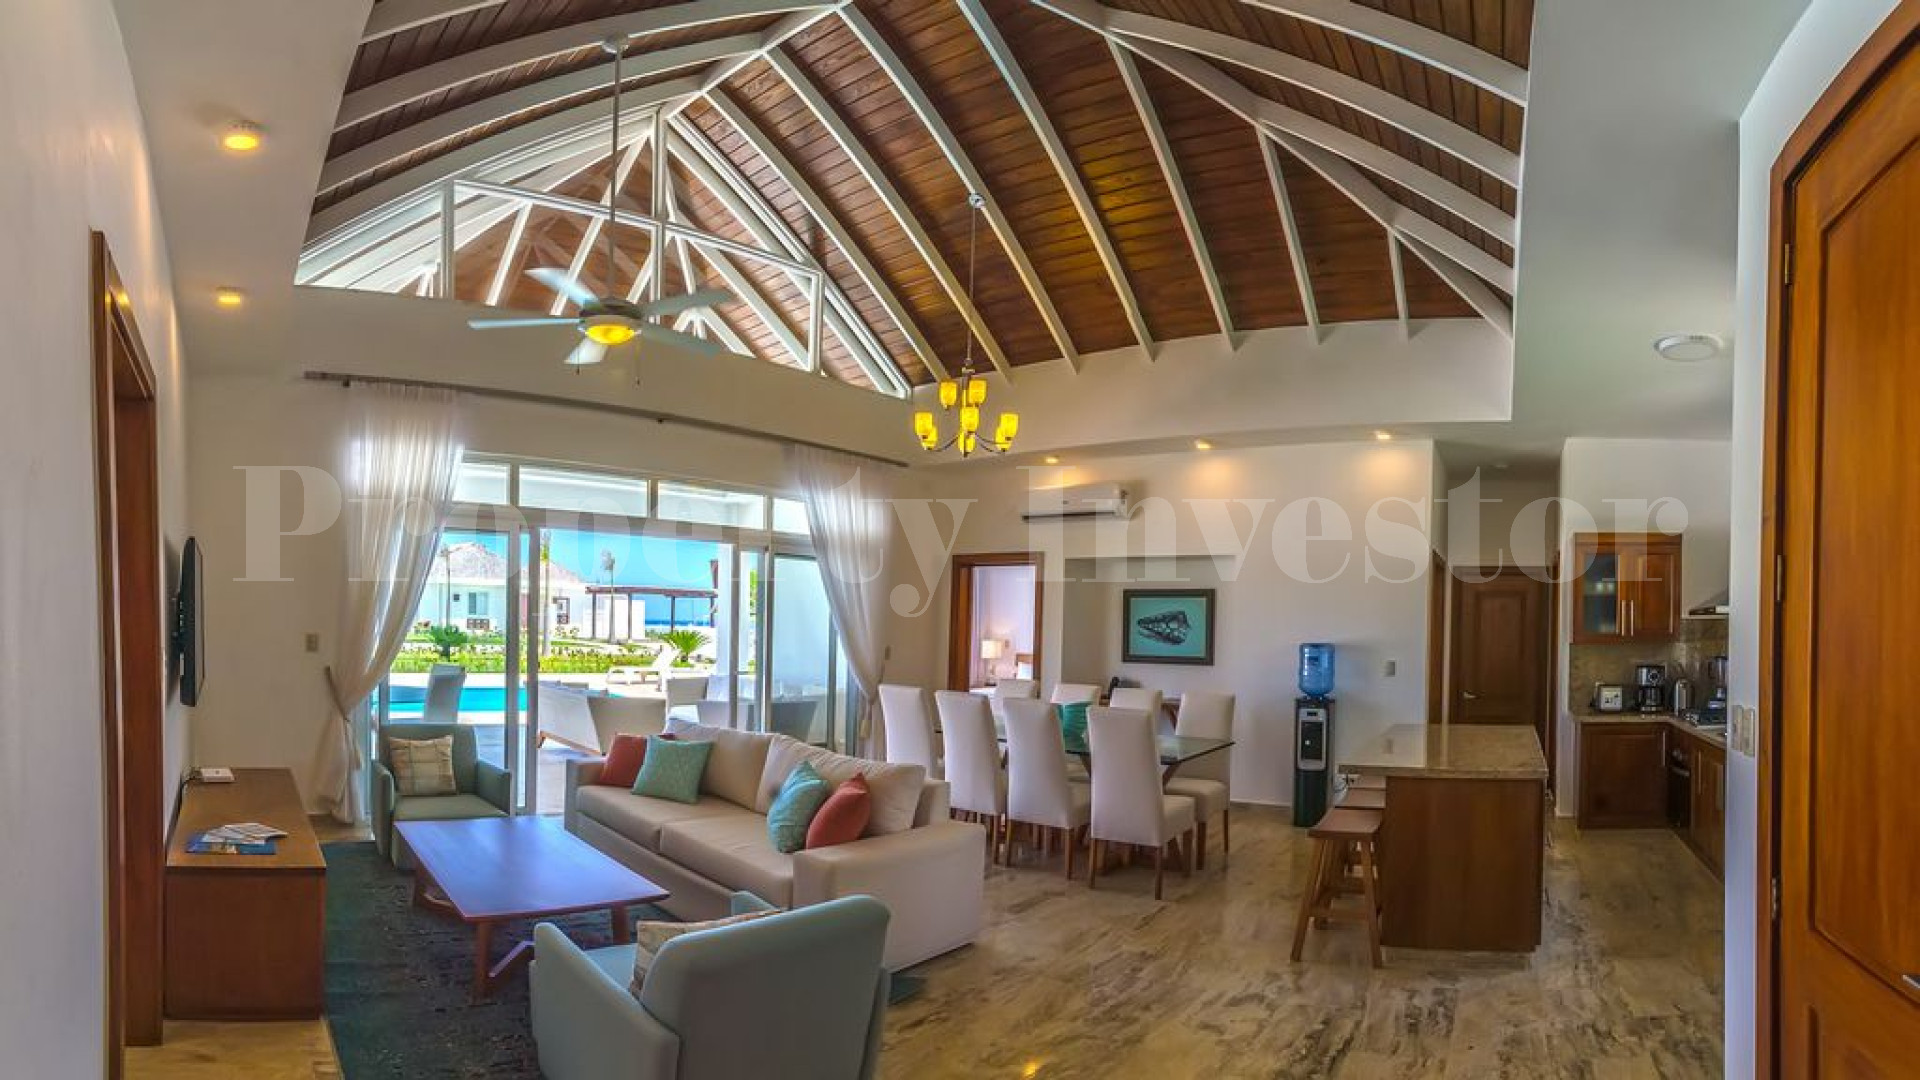 3 Bedroom Oceanview Villa in the Dominican Republic with 30 Year Financing (Villa 16)